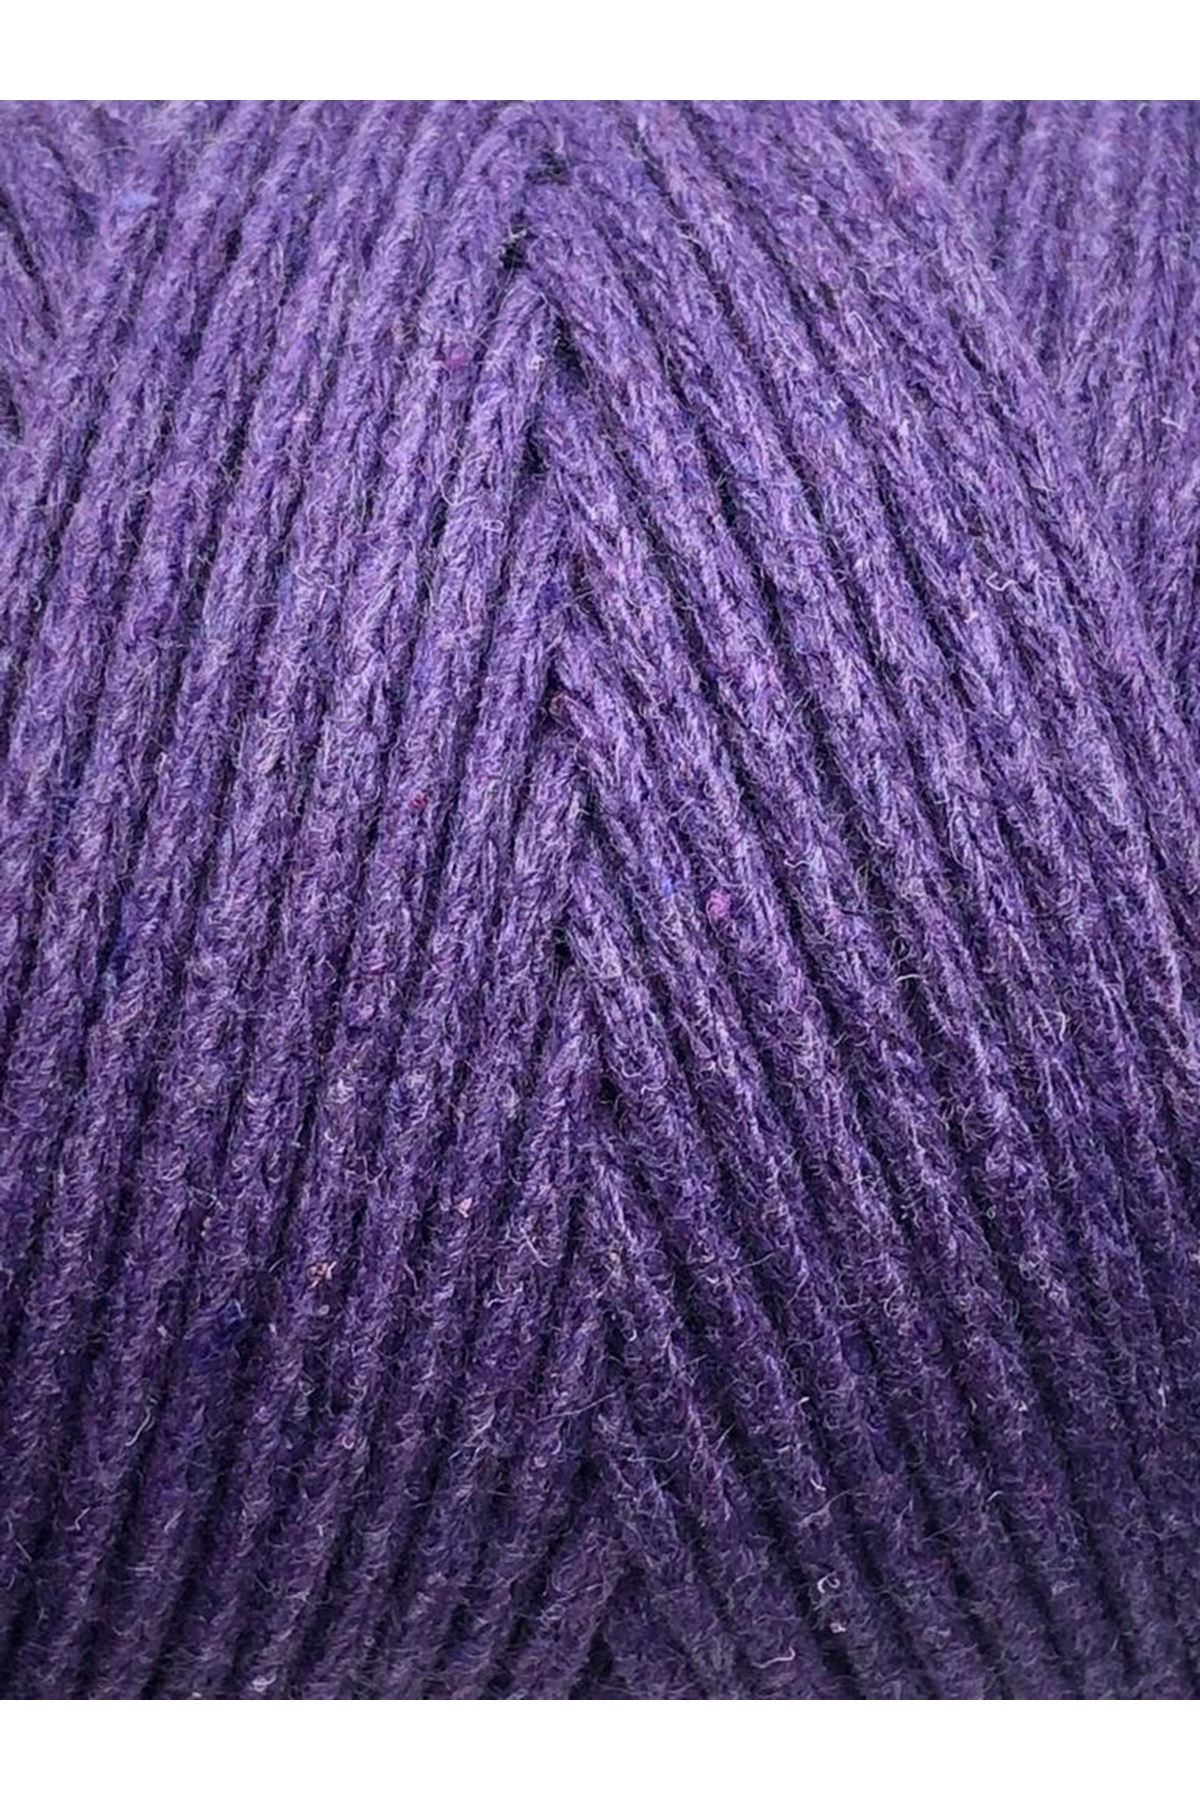 Cotton Makrome 1059 Violet